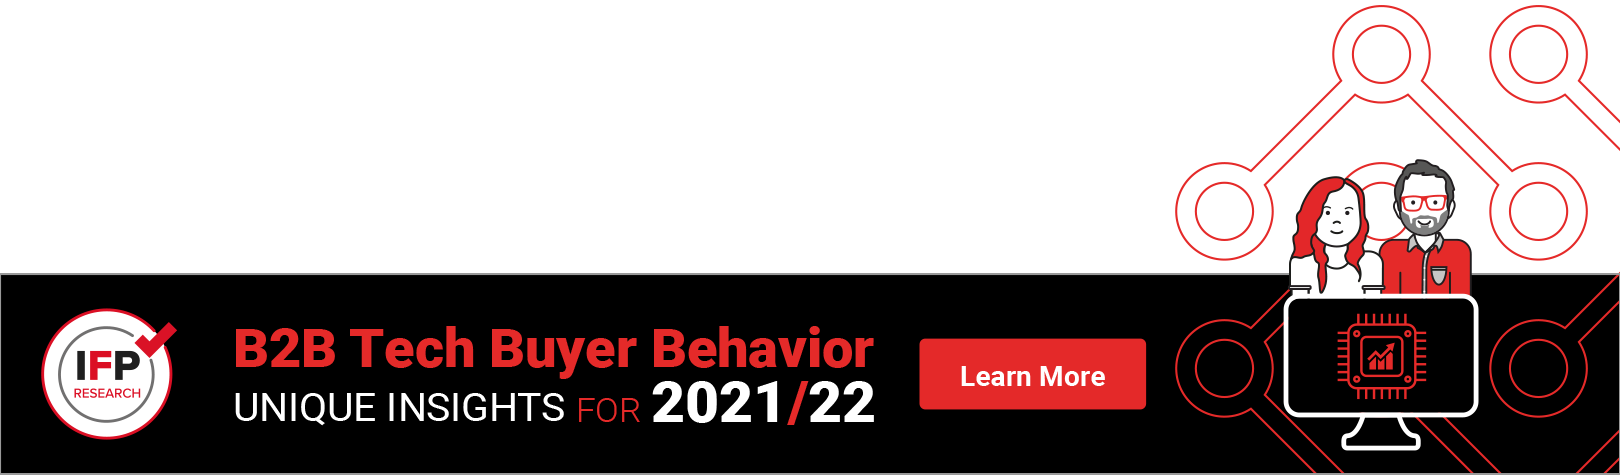 B2B Tech Buyer Behavior WP banner